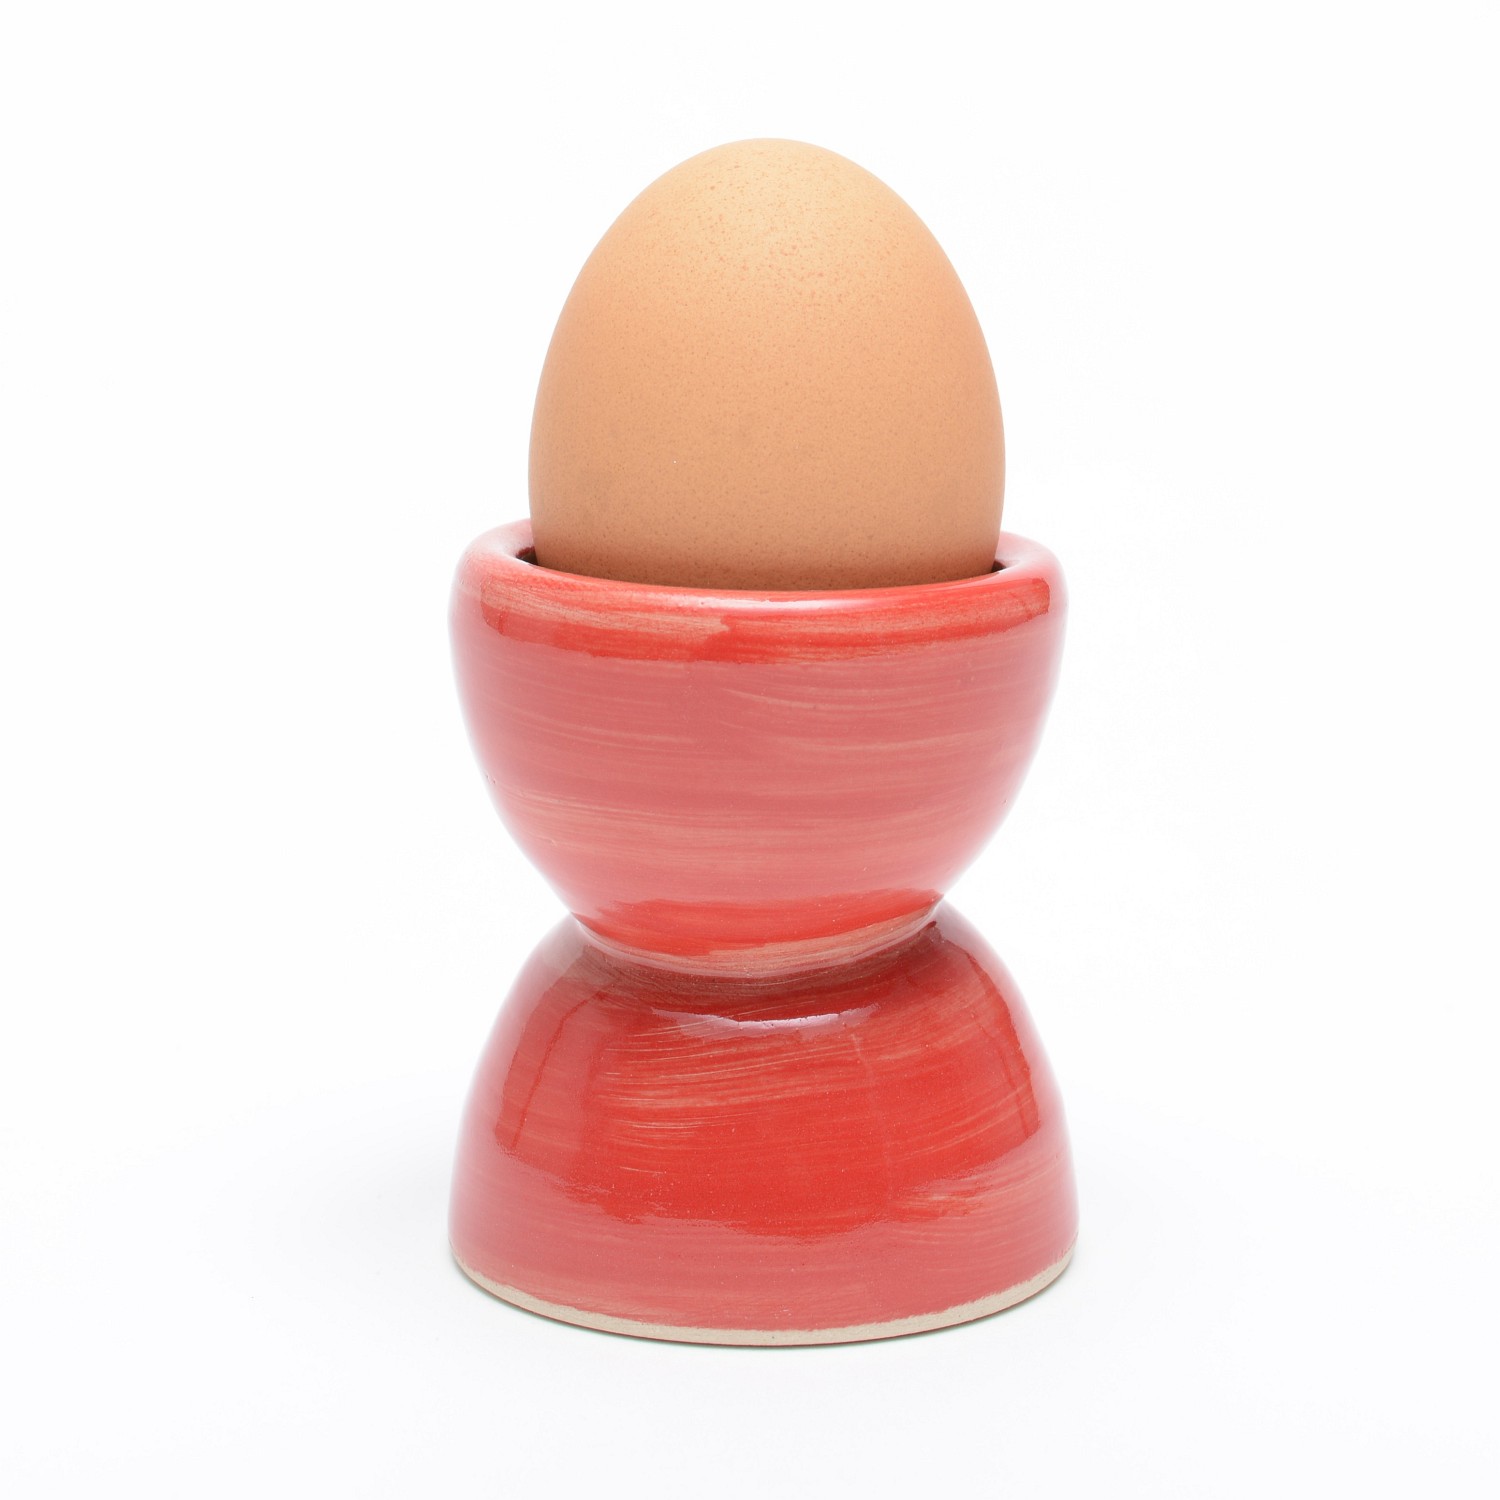 Eierbecher aus Keramik, rot